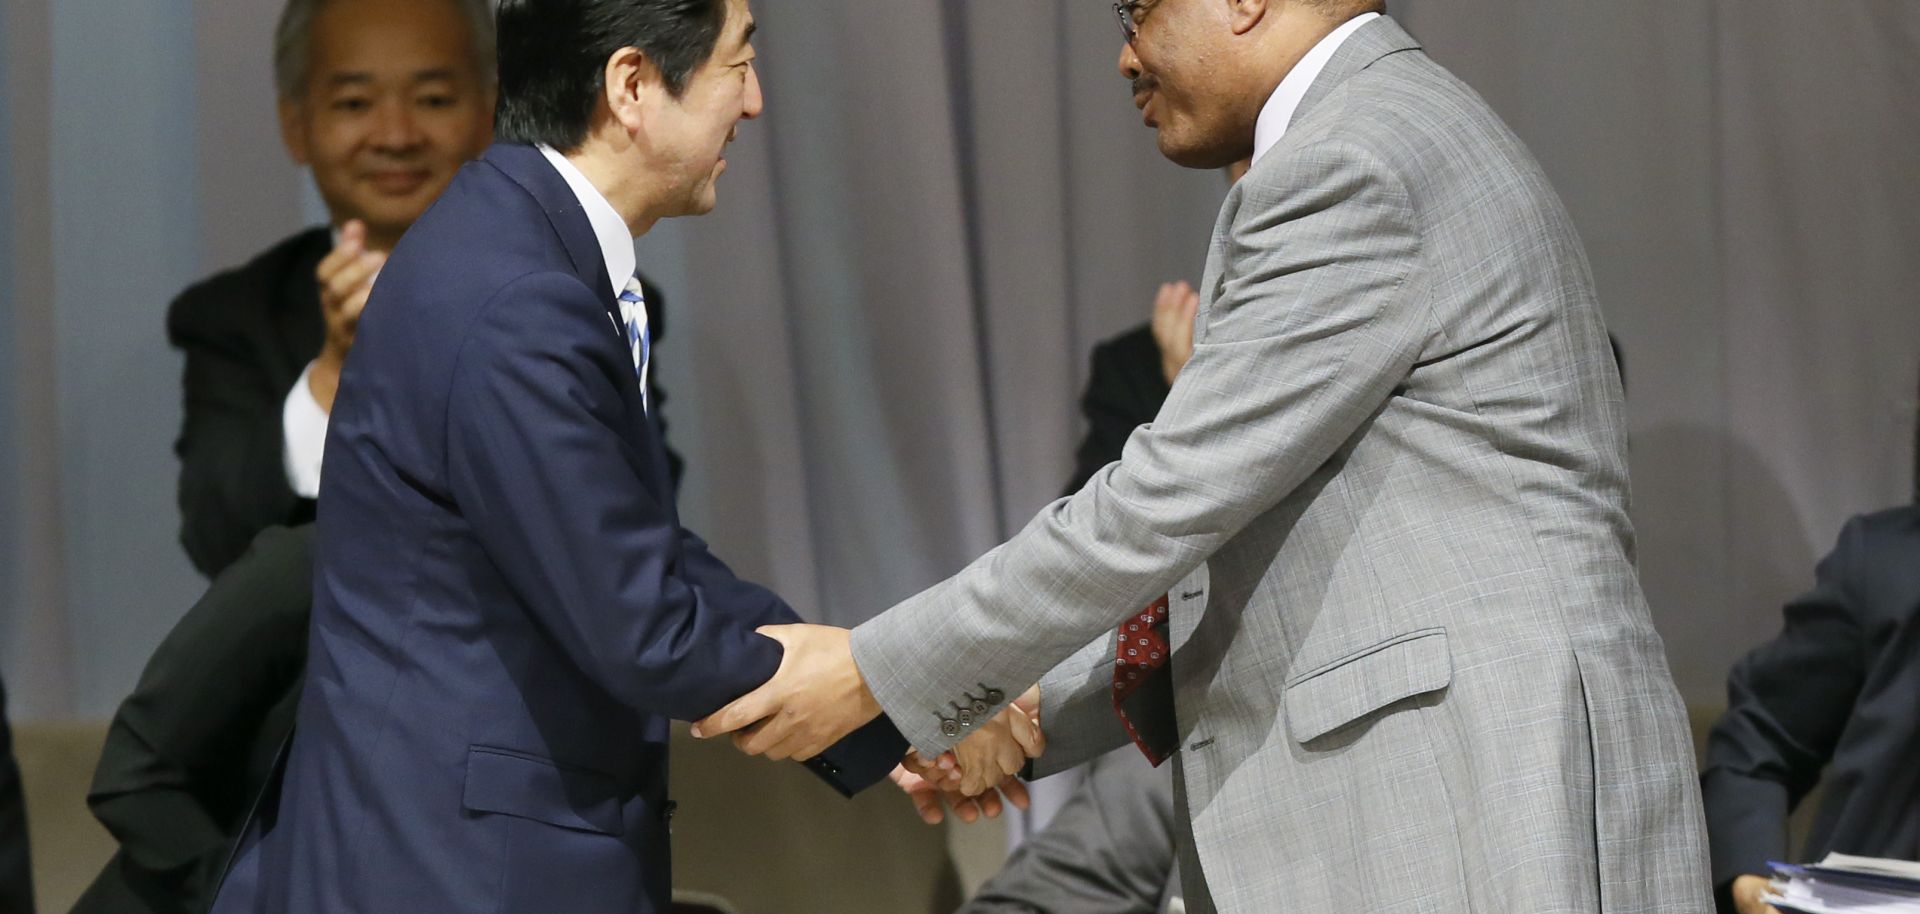 Ethiopian Prime Minister Hailemariam Desalegan and Japanese Prime Minister Shinzo Abe shake hands.